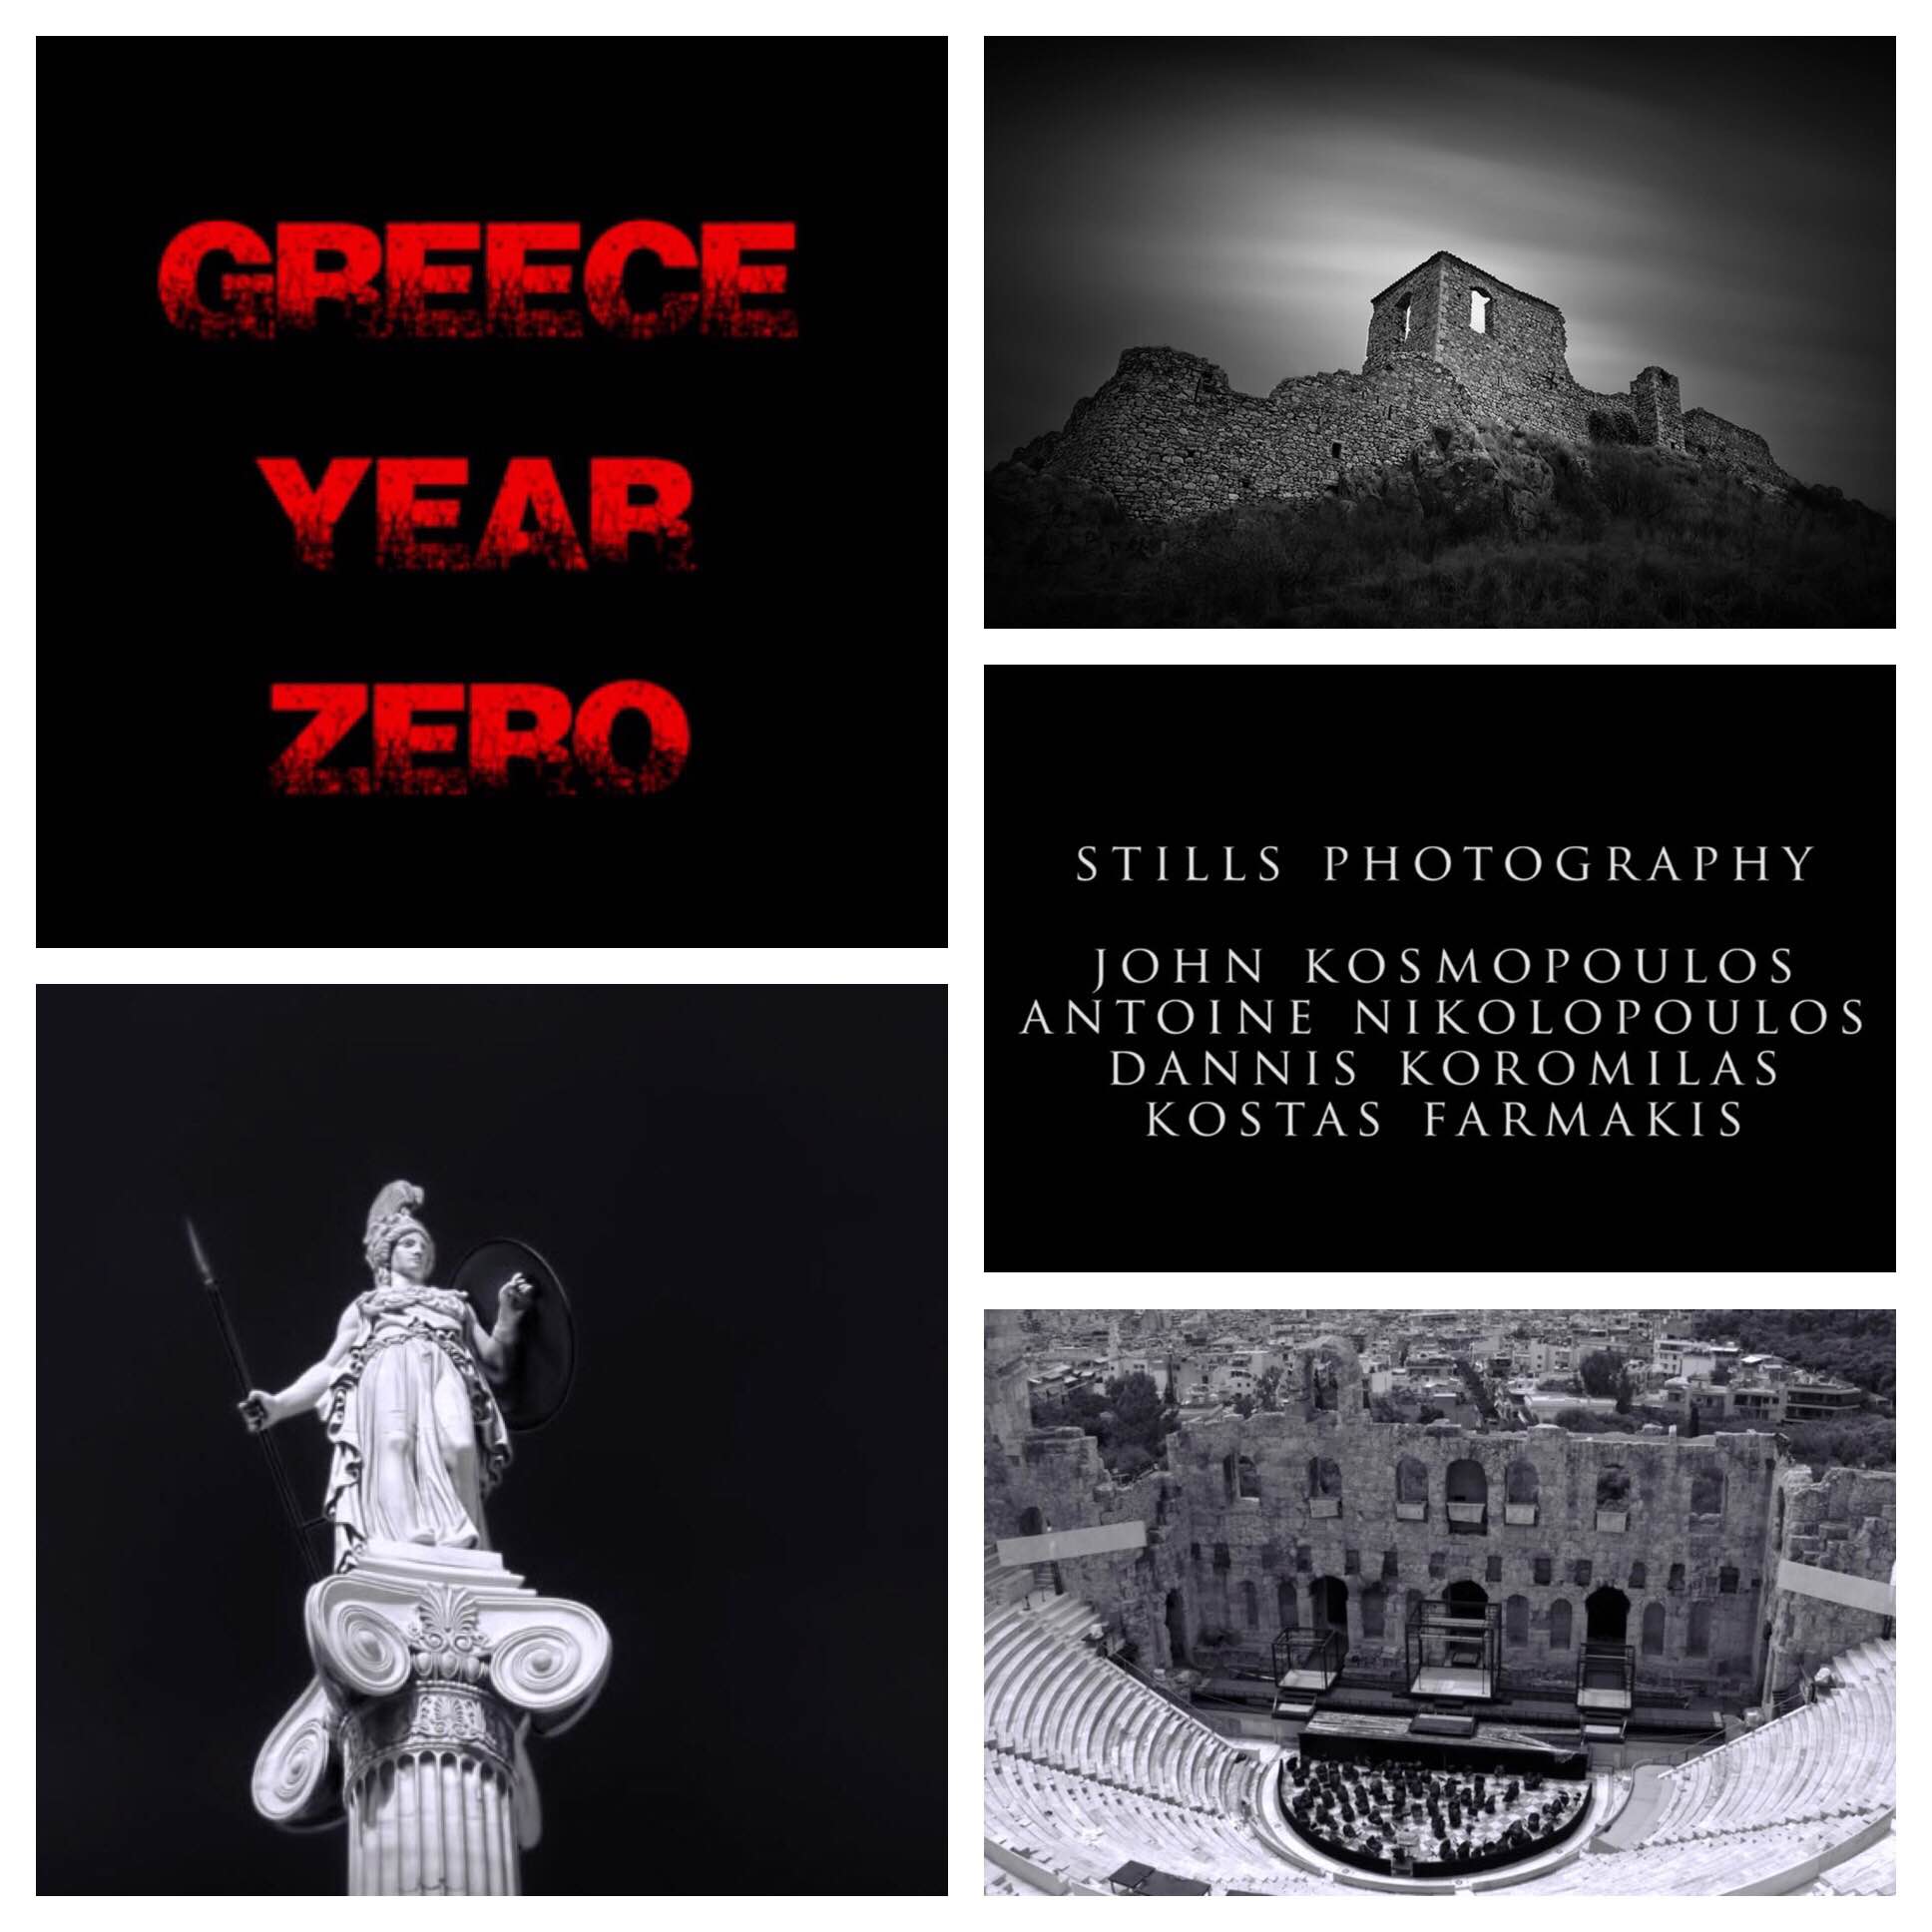 Greece Year Zero - My Photos - SZP-JK